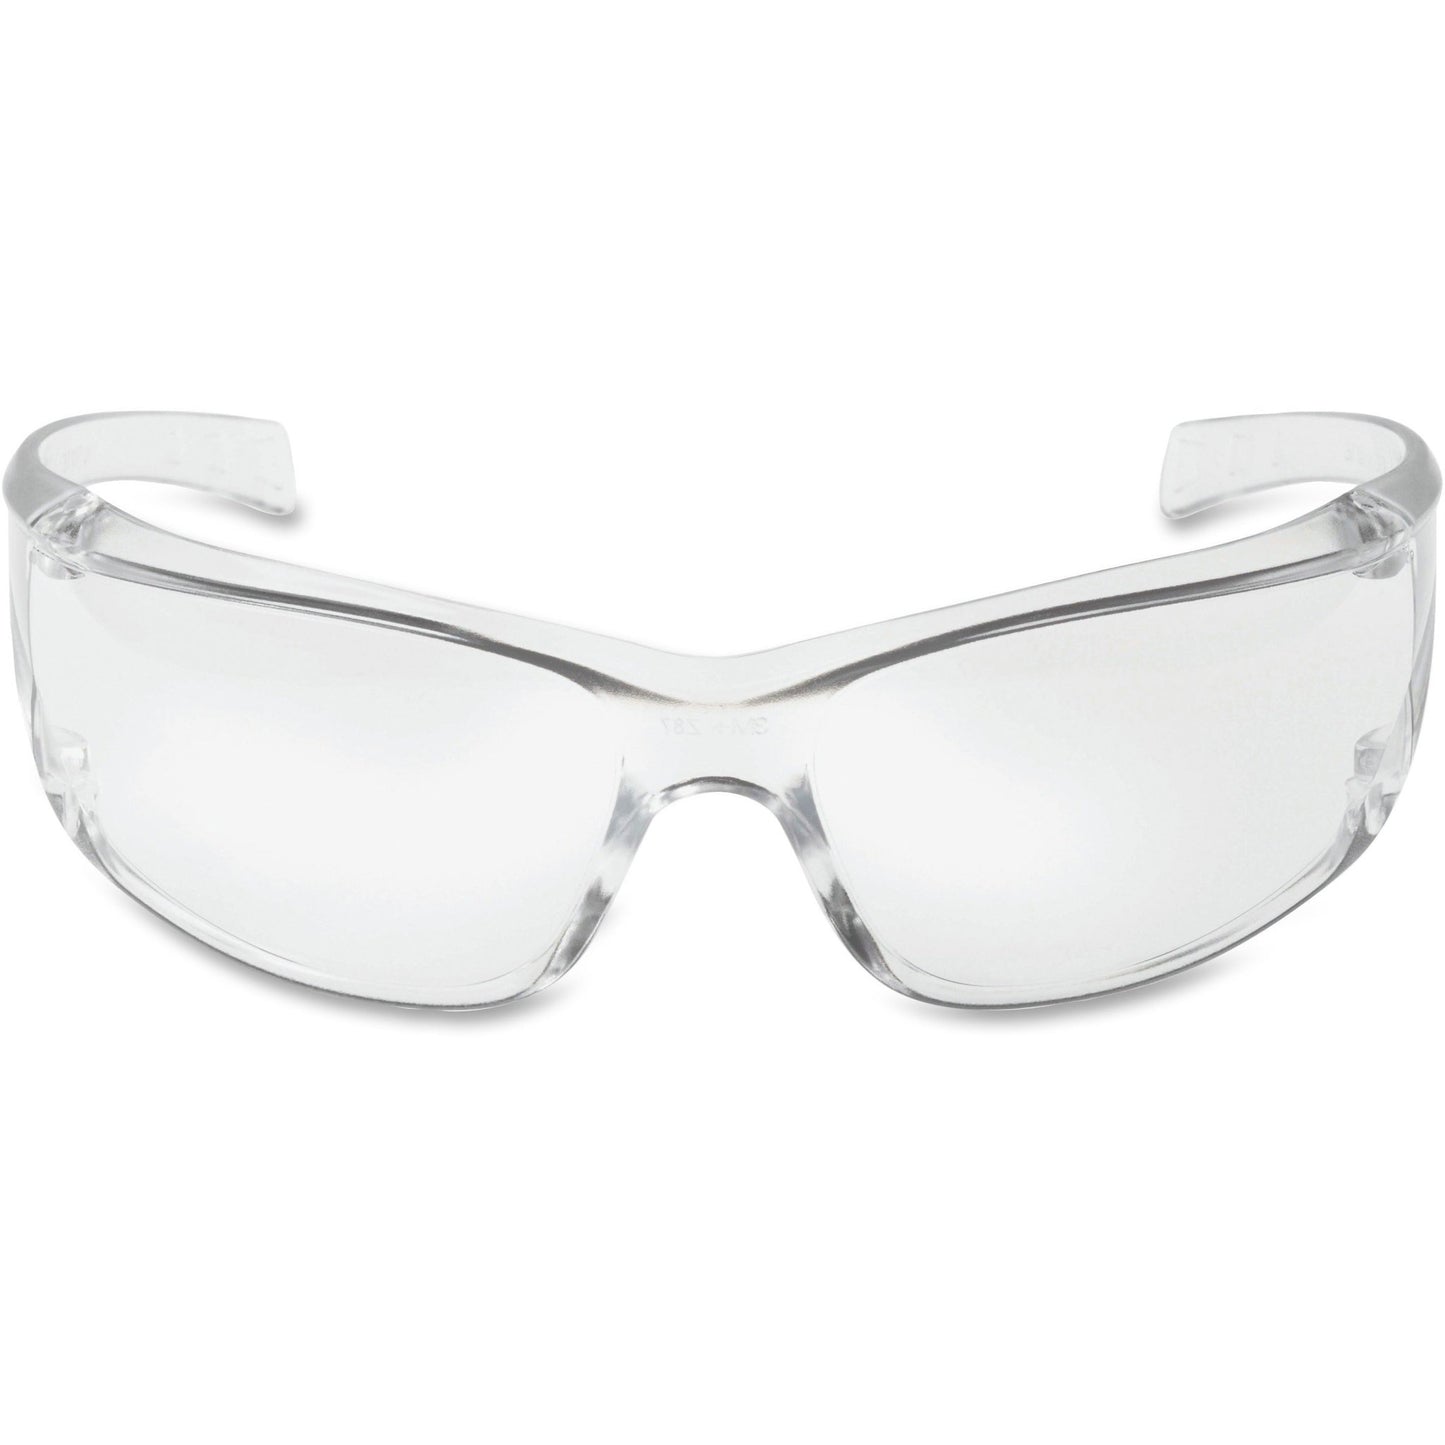 3M Virtua AP Protective Eyewear Clear Frame and Anti-Fog Lens (20 Pack) 11818-00000-20 - Becauze